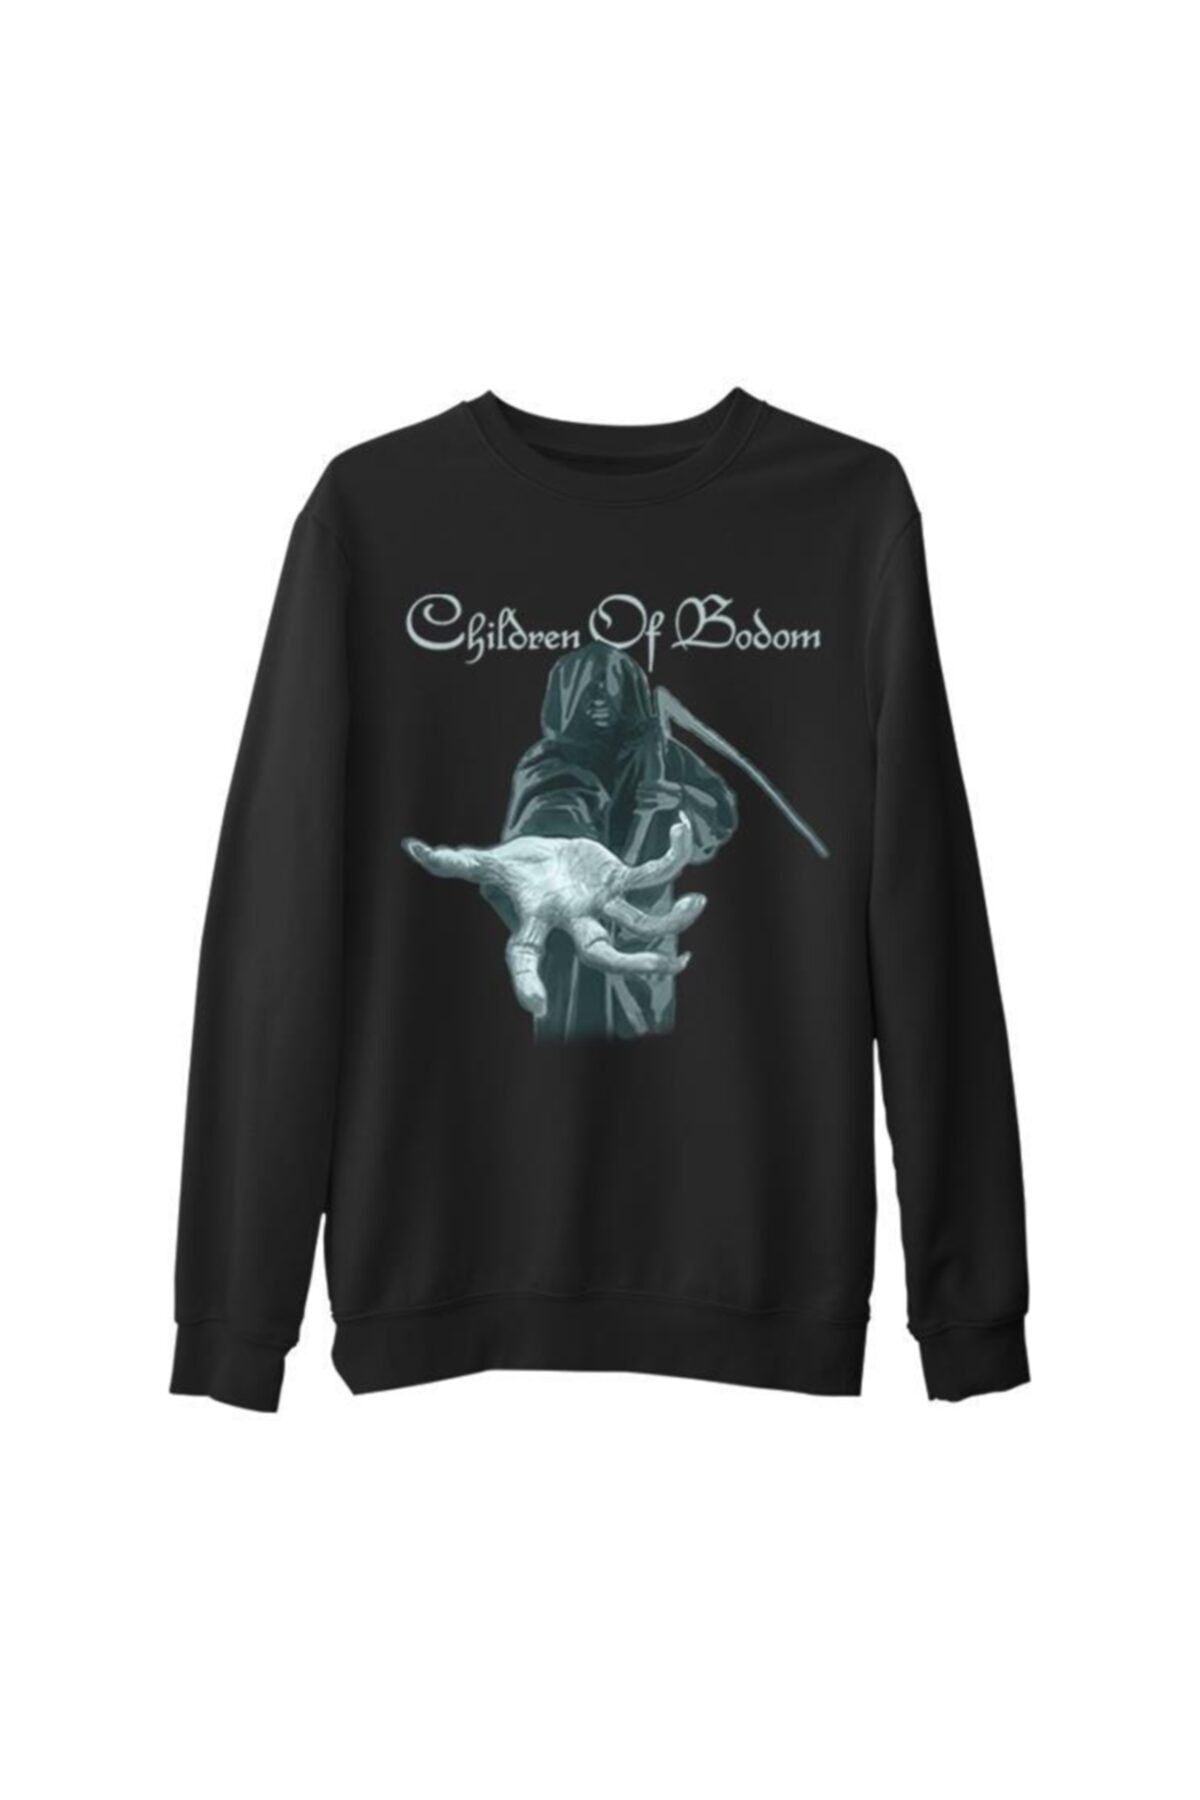 Lord T-Shirt Children Of Bodom - Something Wild Siyah Erkek Kalın Sweatshirt